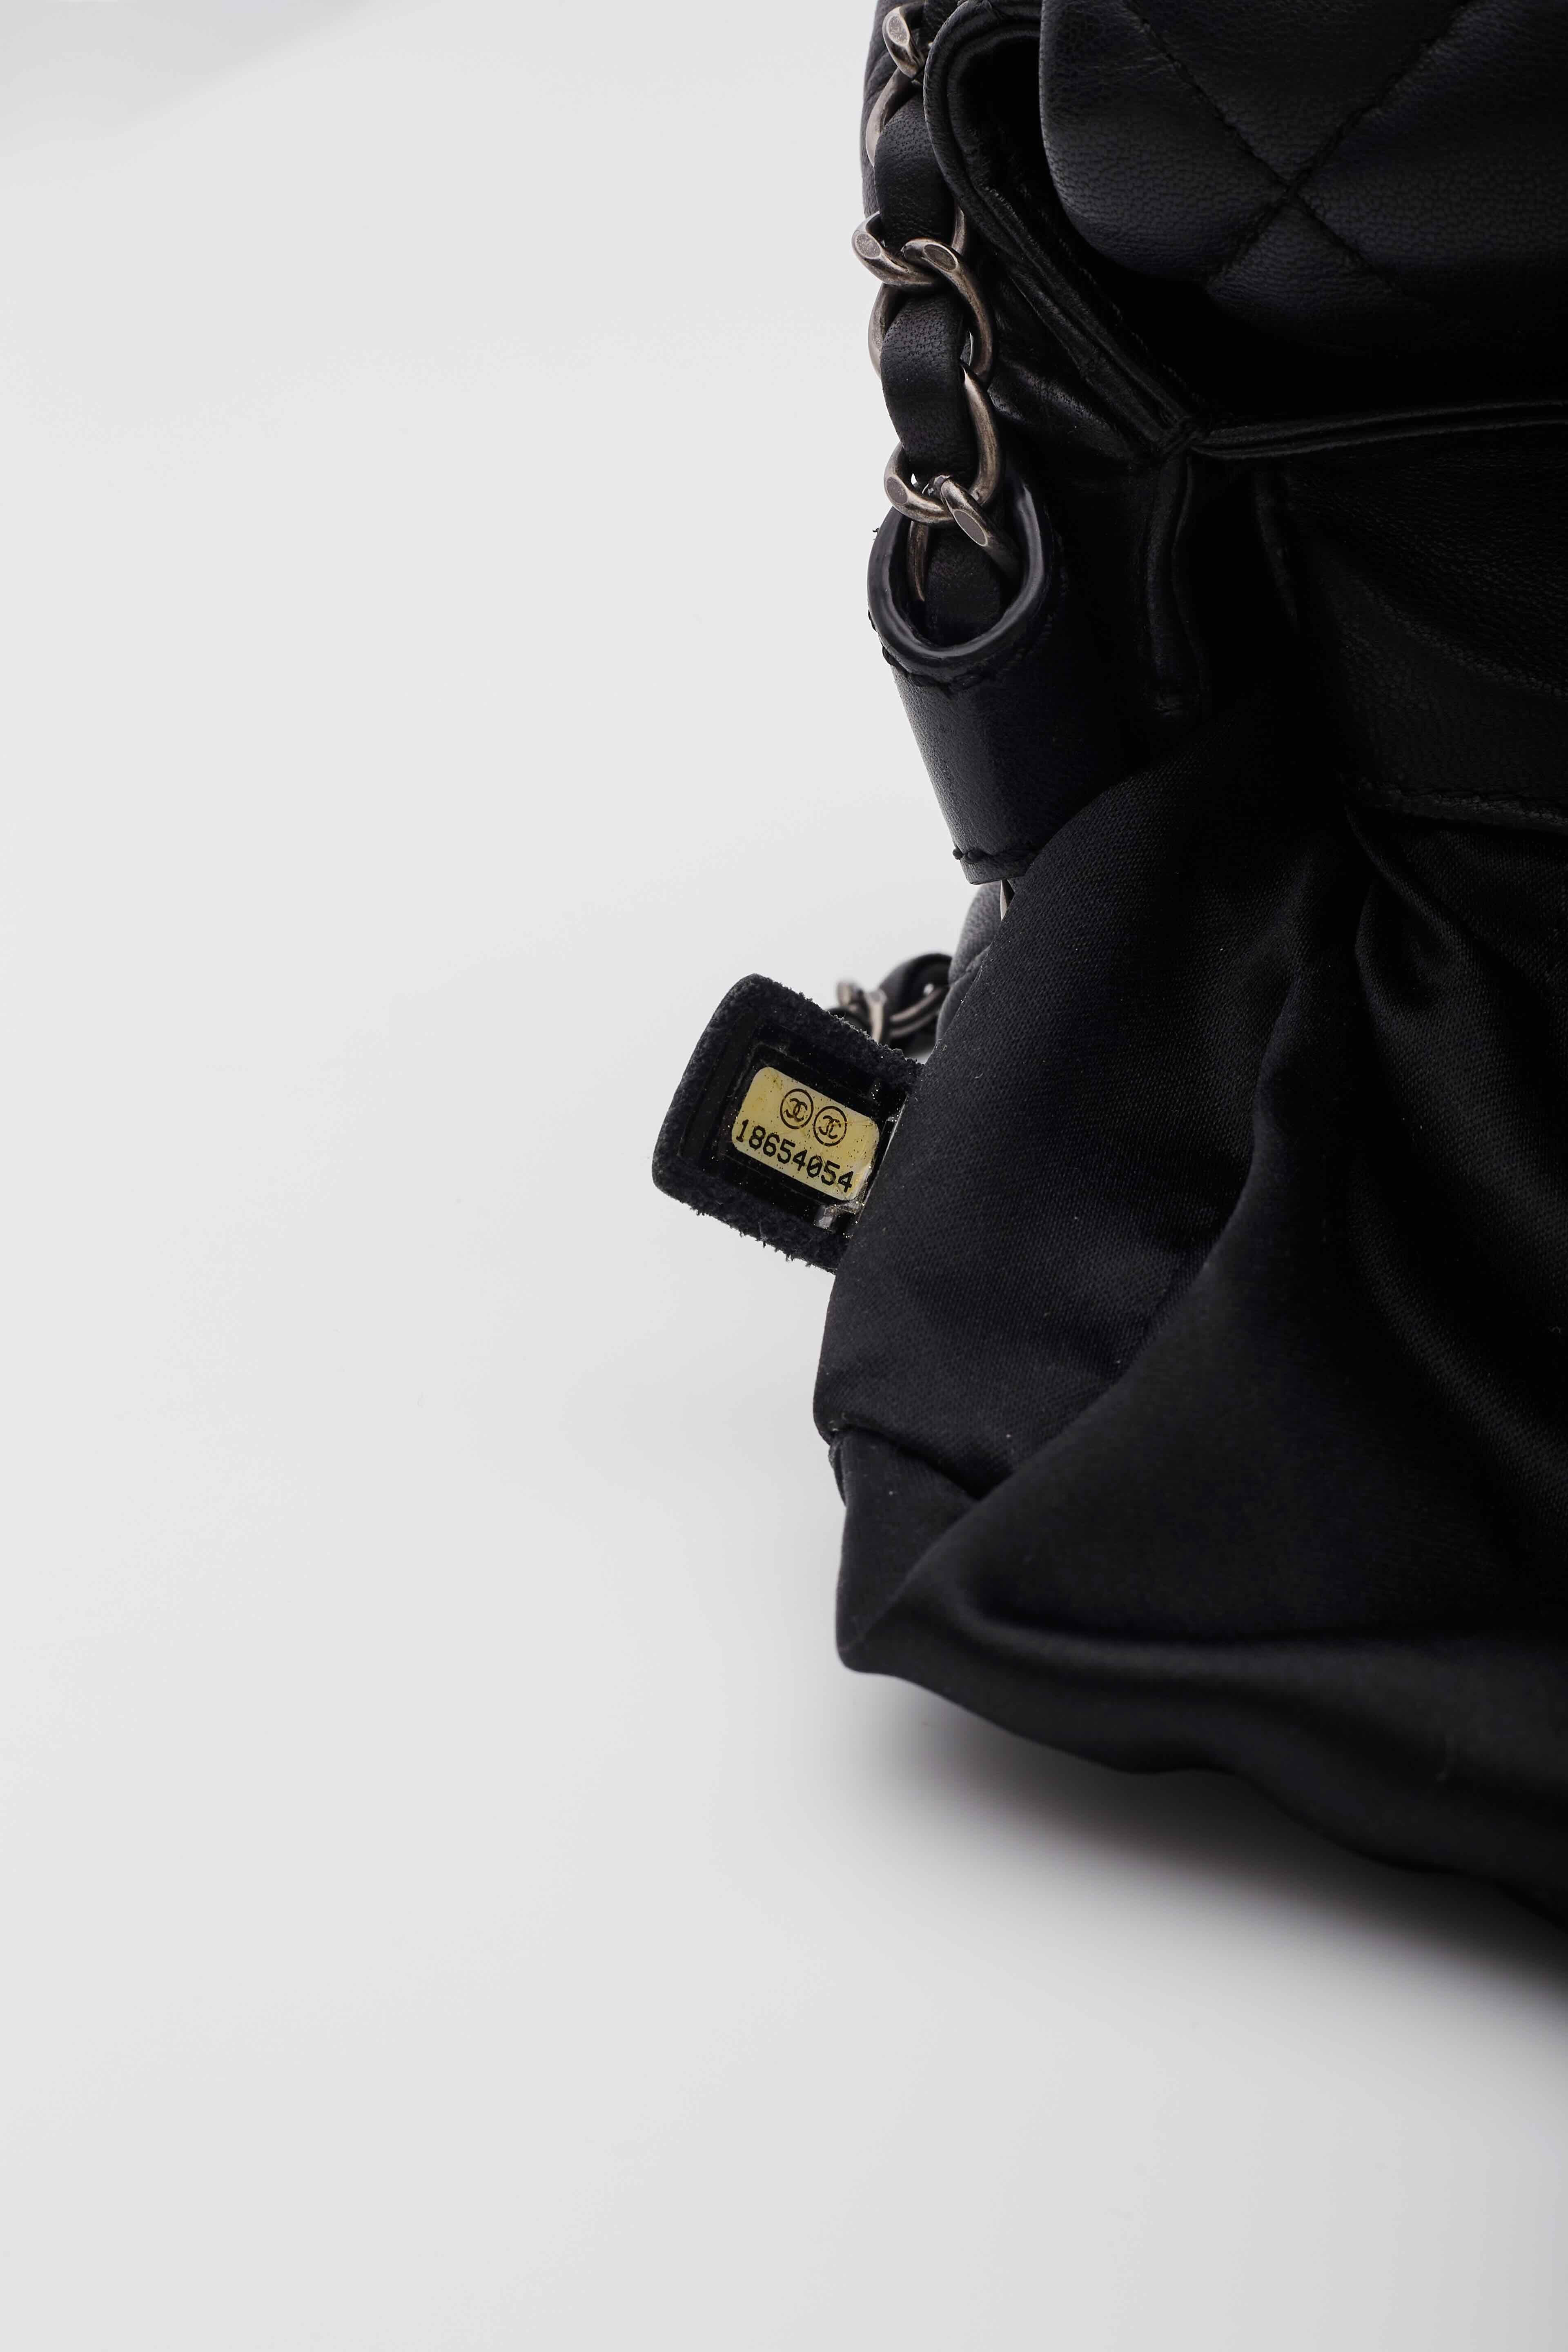 Chanel Black Lambskin Two Way Flap Shoulder Bag For Sale 4